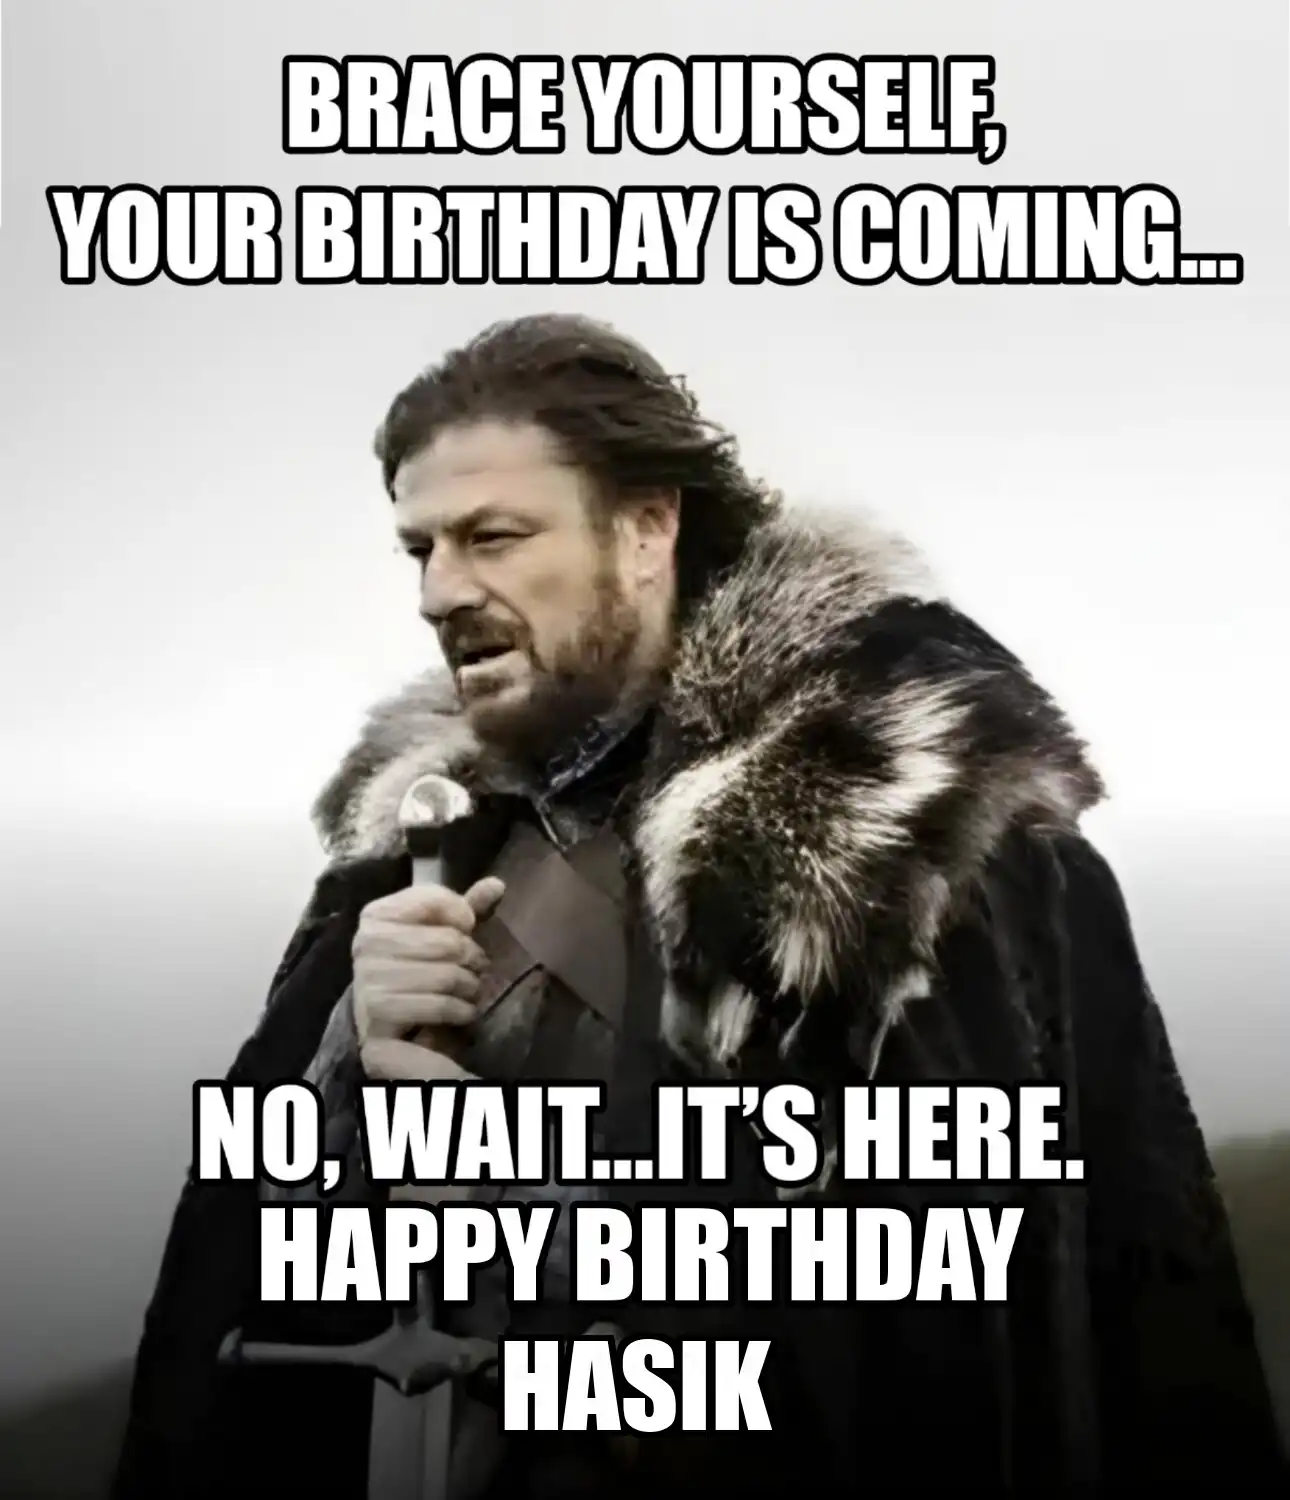 Happy Birthday Hasik Brace Yourself Your Birthday Is Coming Meme